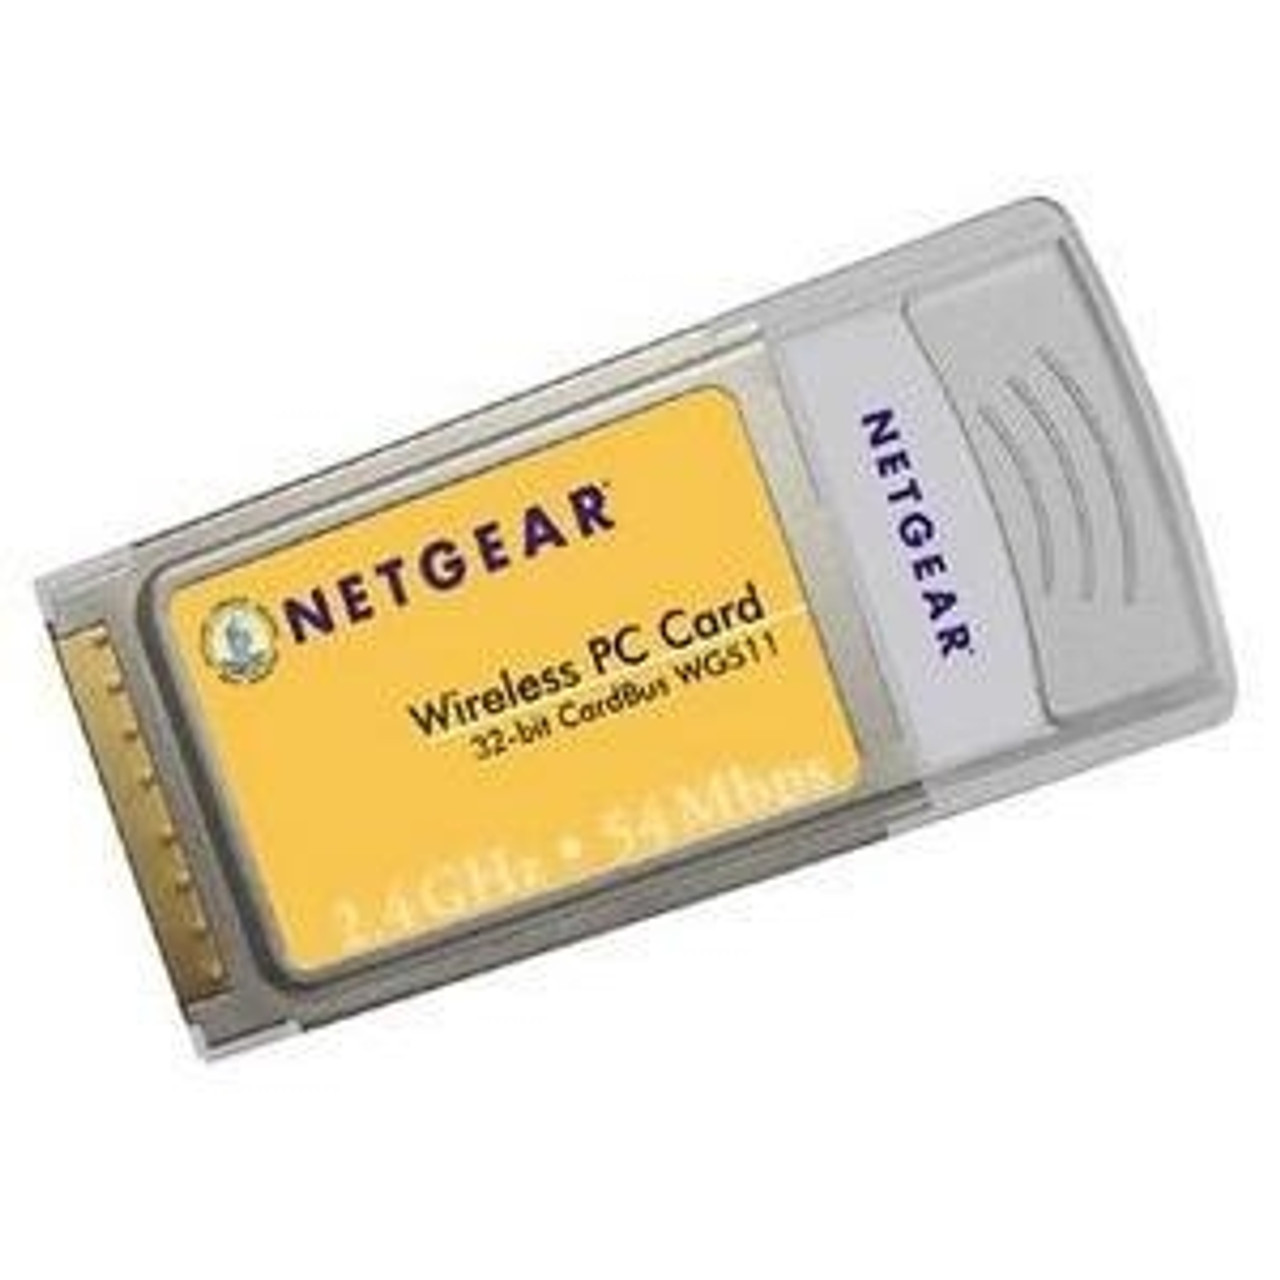 WG511CN NetGear WG511 Wireless PC Network Card (Refurbished)